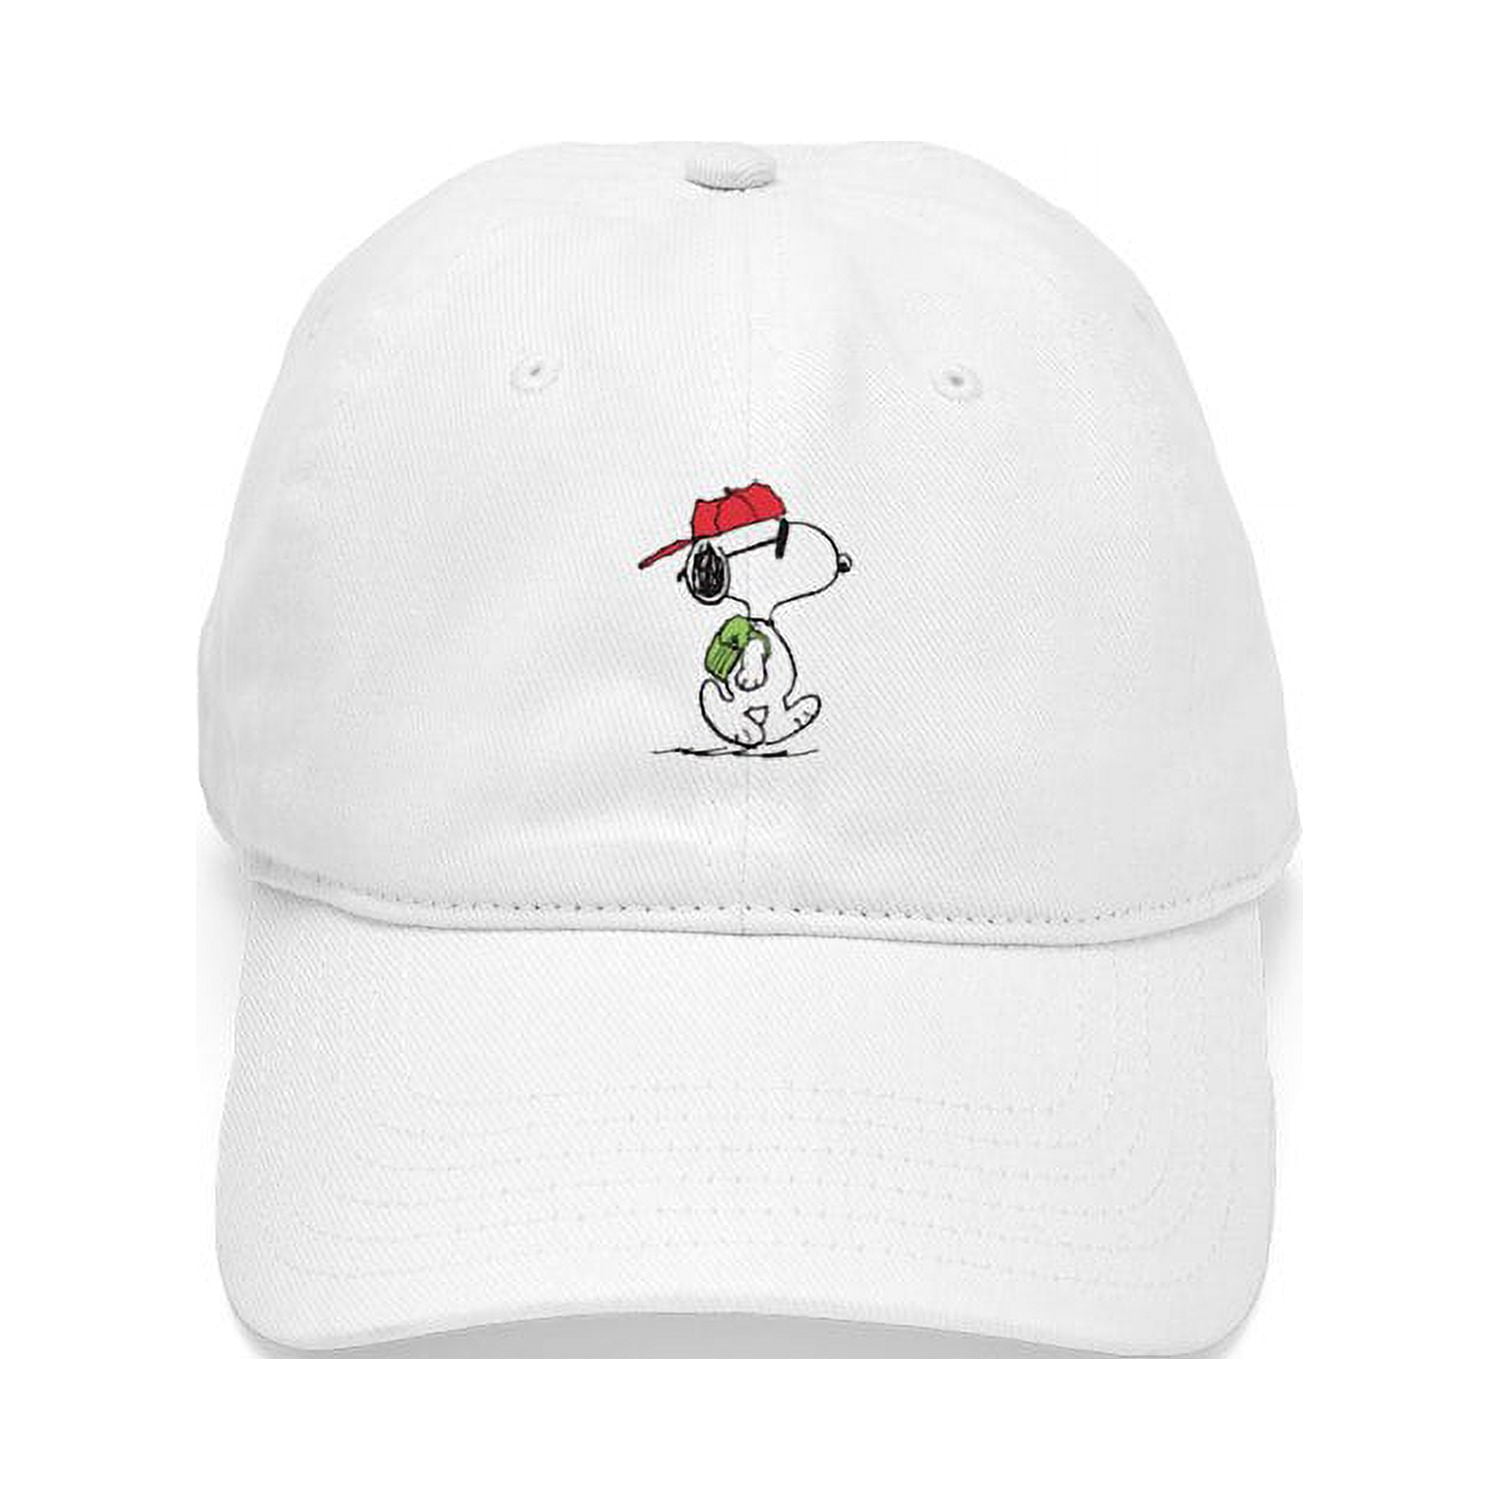 CafePress - SNOOPY Joe Cool - Printed Adjustable Baseball Hat